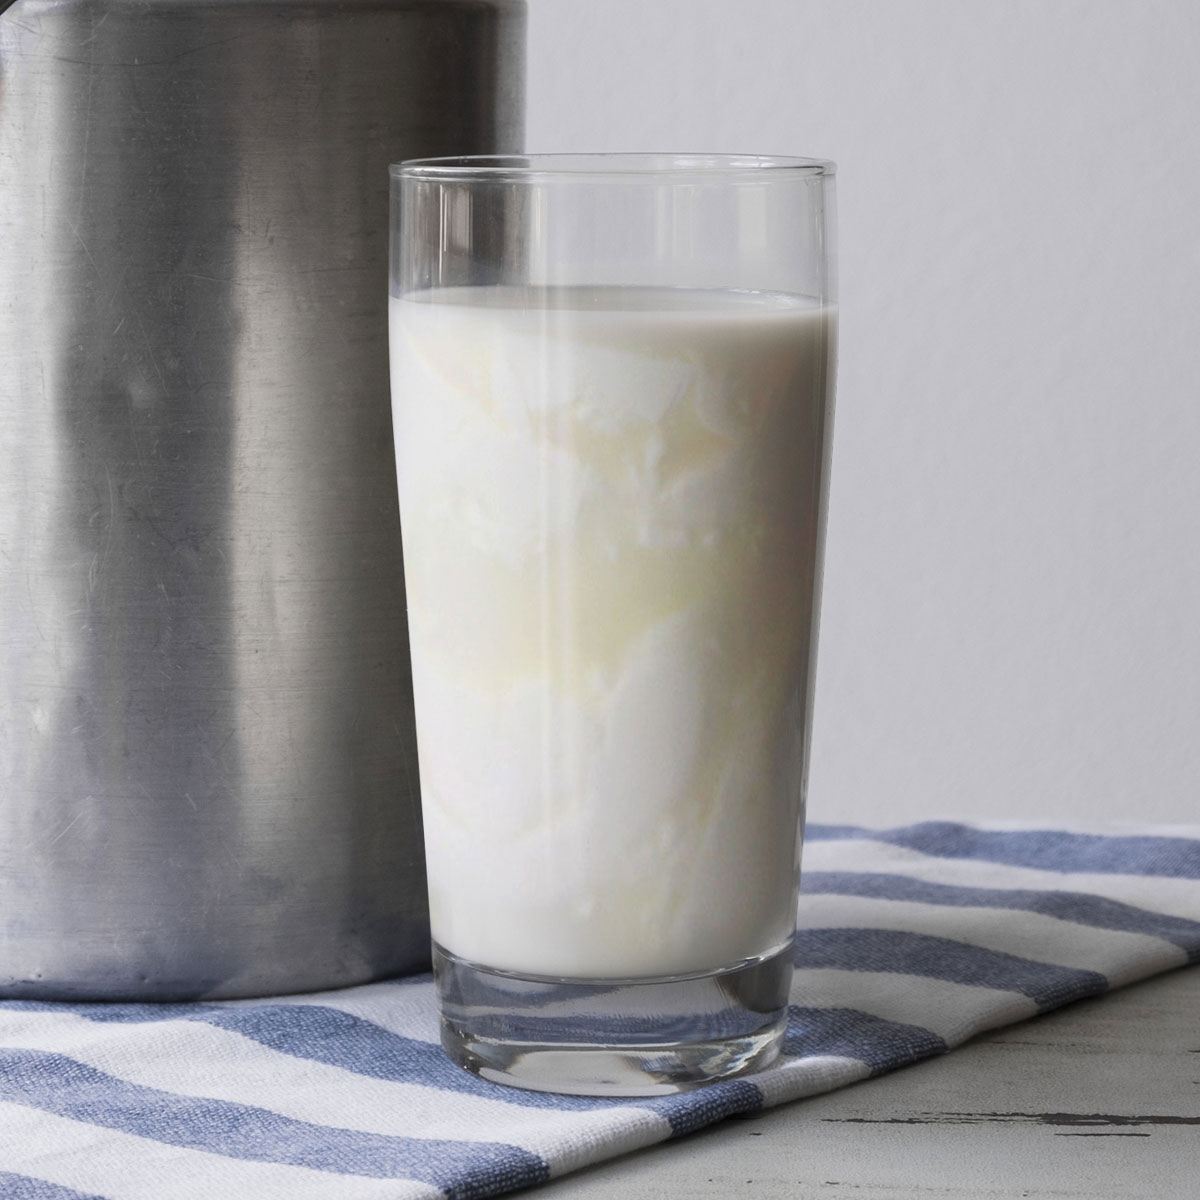 How To Make Soured Milk [Easy Recipe]